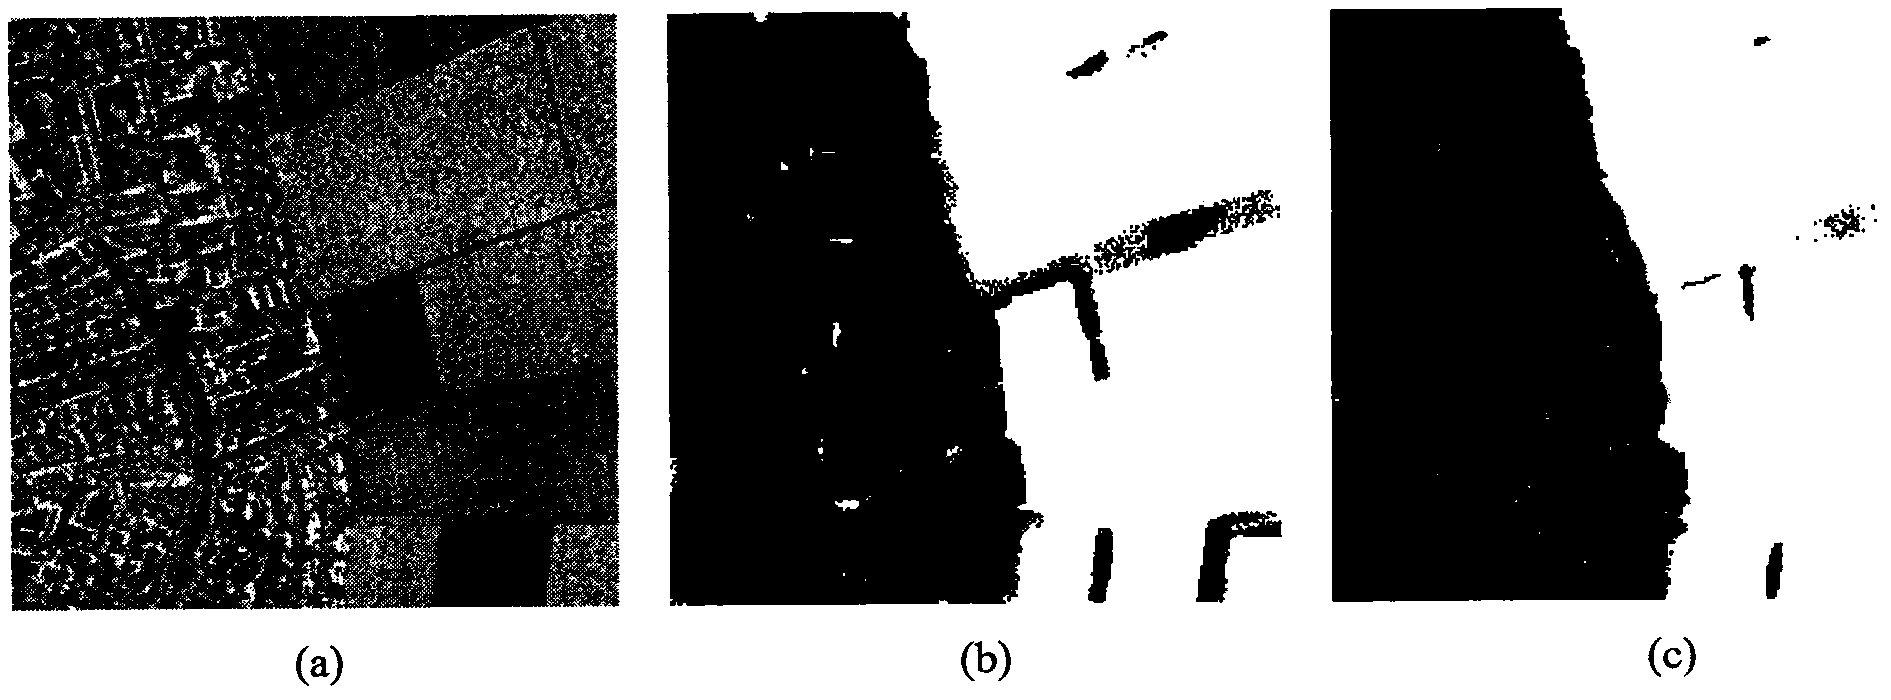 K distribution and texture feature-based SAR (Synthetic Aperture Radar) image segmentation method